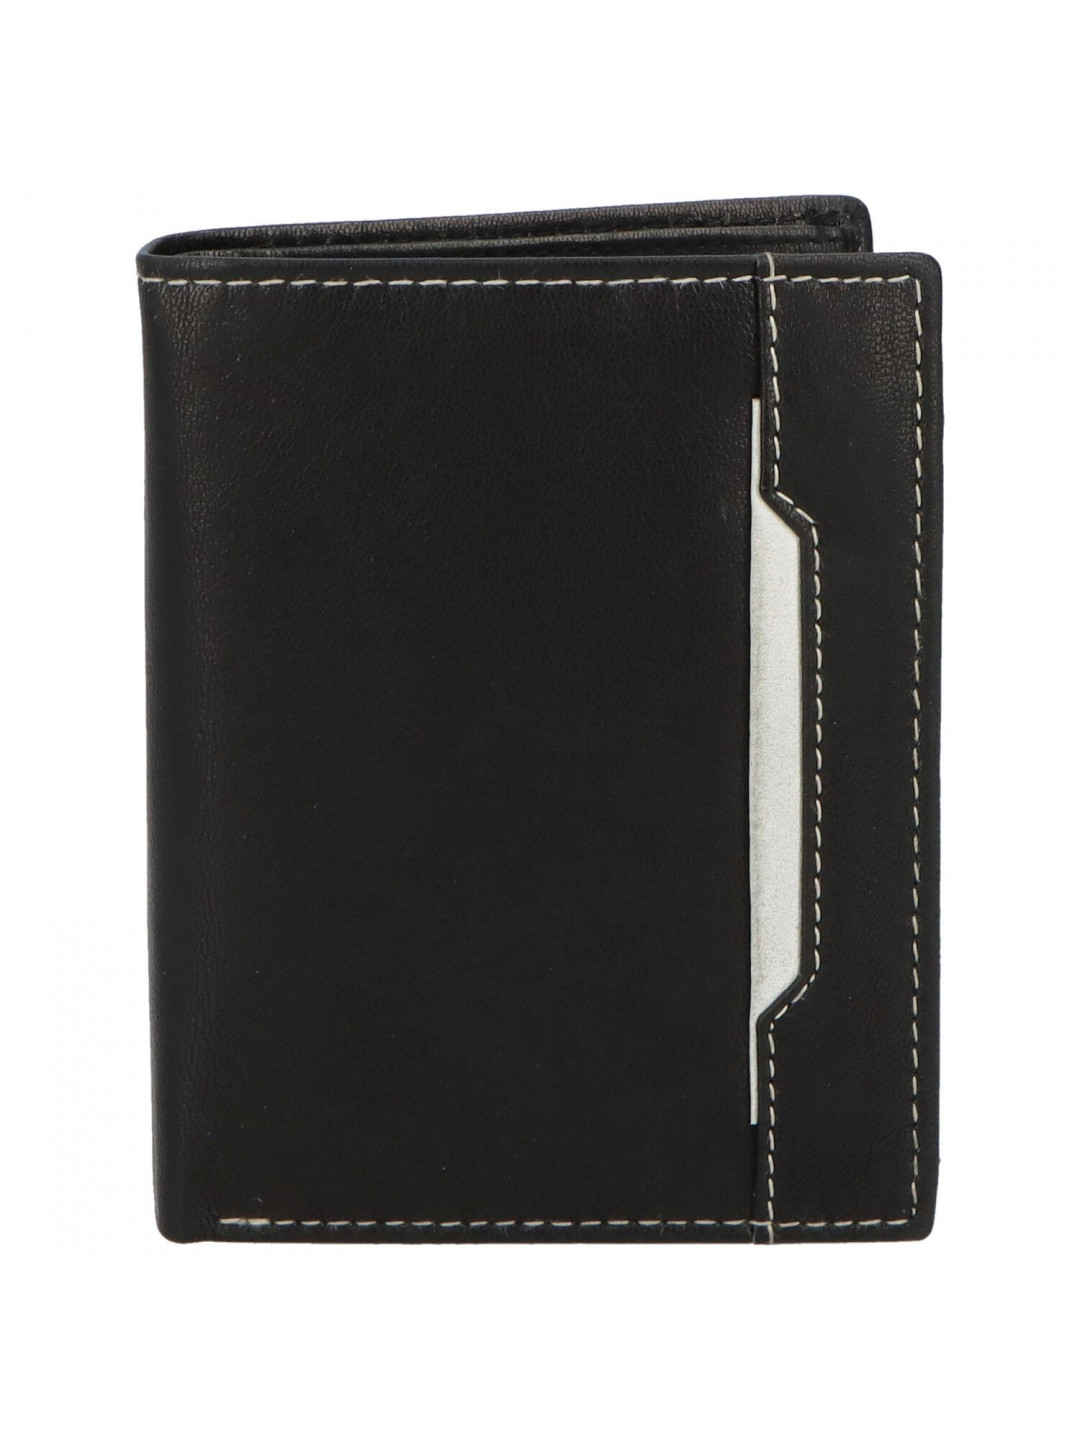 Pánská kožená peněženka černo bílá – Diviley Tarkyn